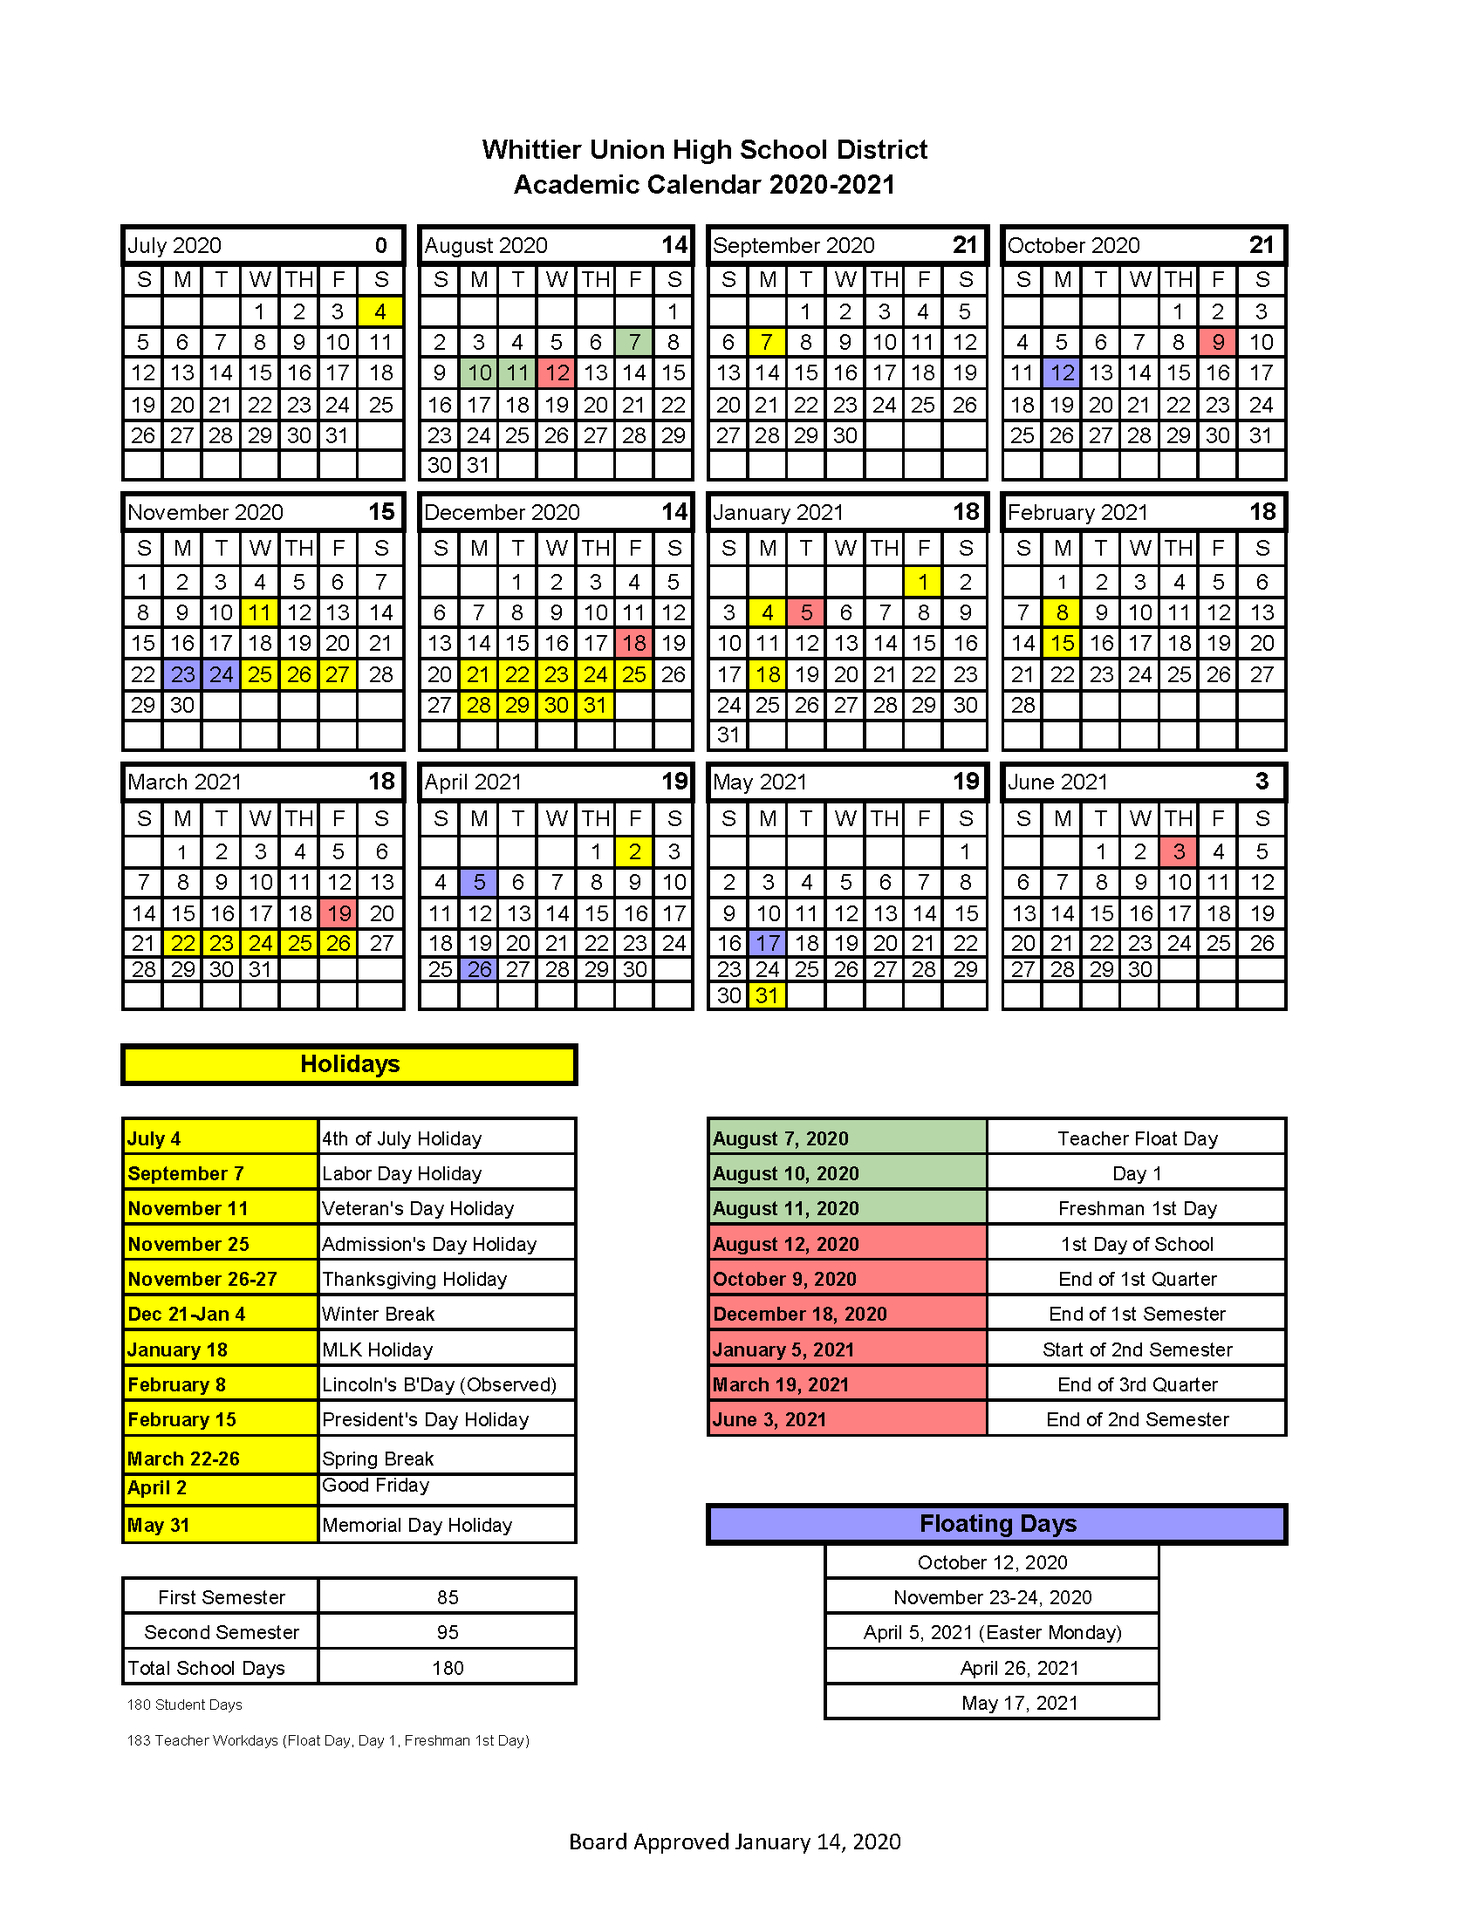 Santa Fe Public Schools Calendar 2021 2022 | Calendar Page-School Calendar 2021 To 2022 California